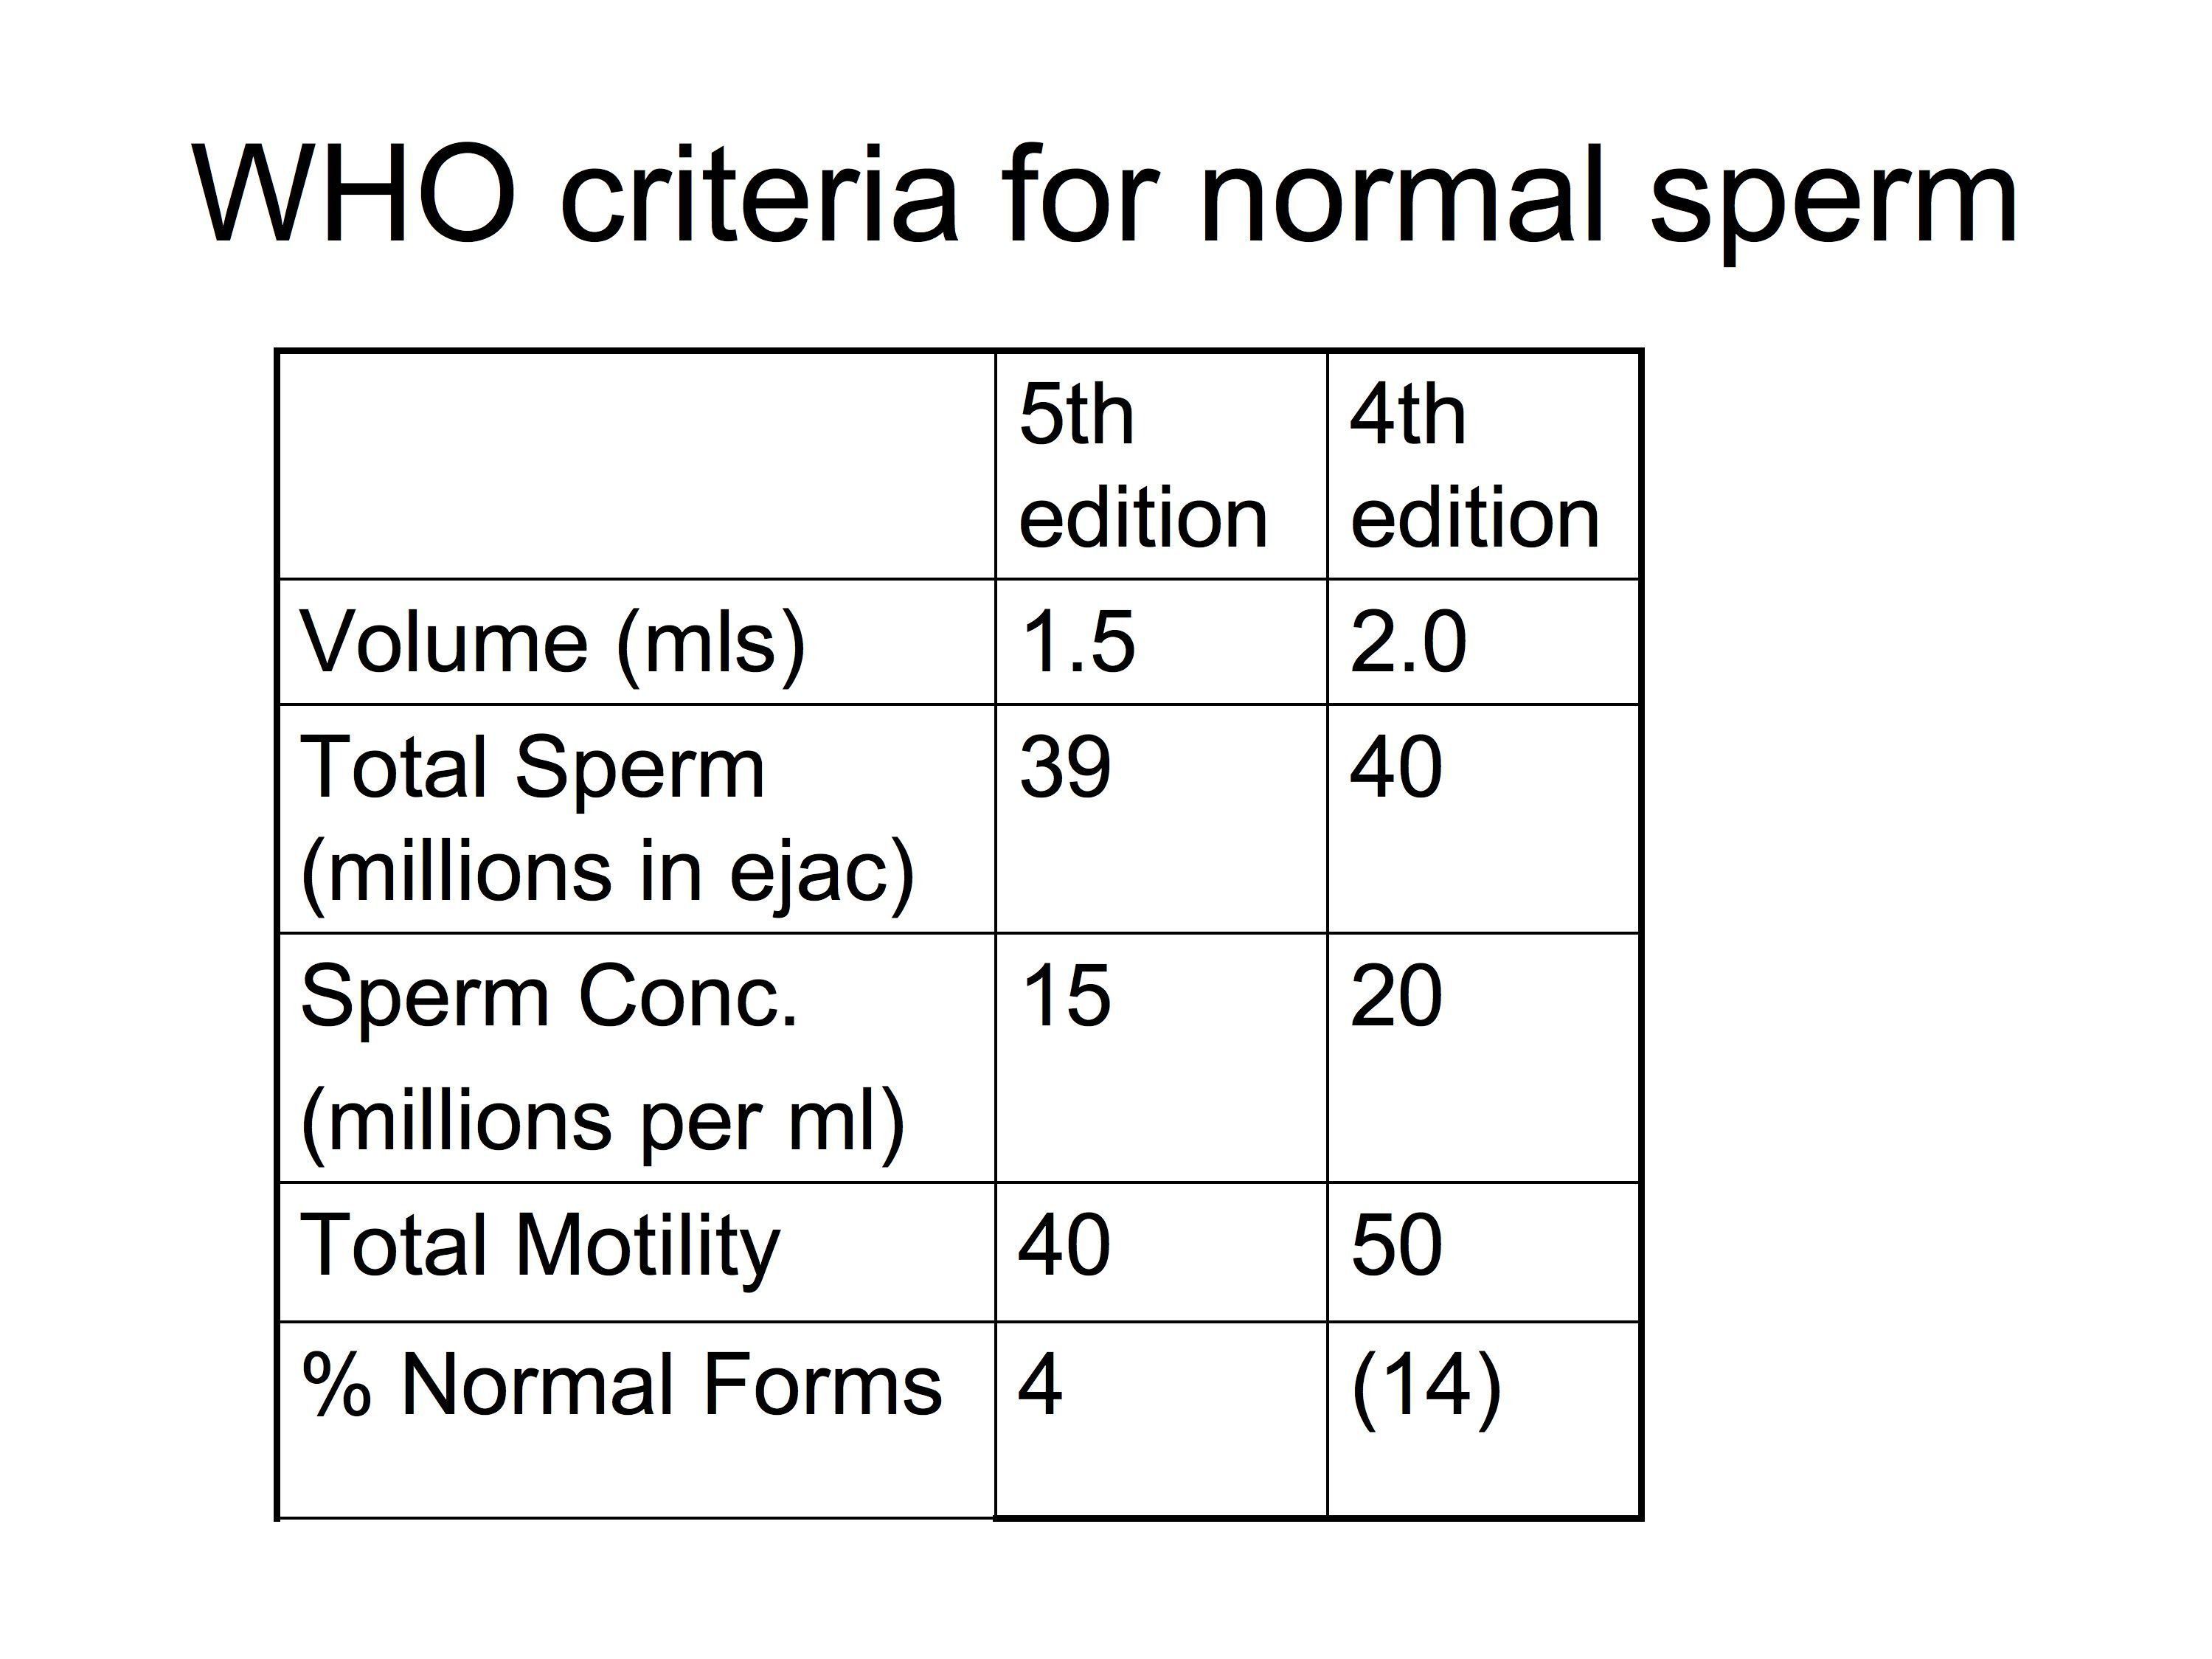 Normal sperm volume